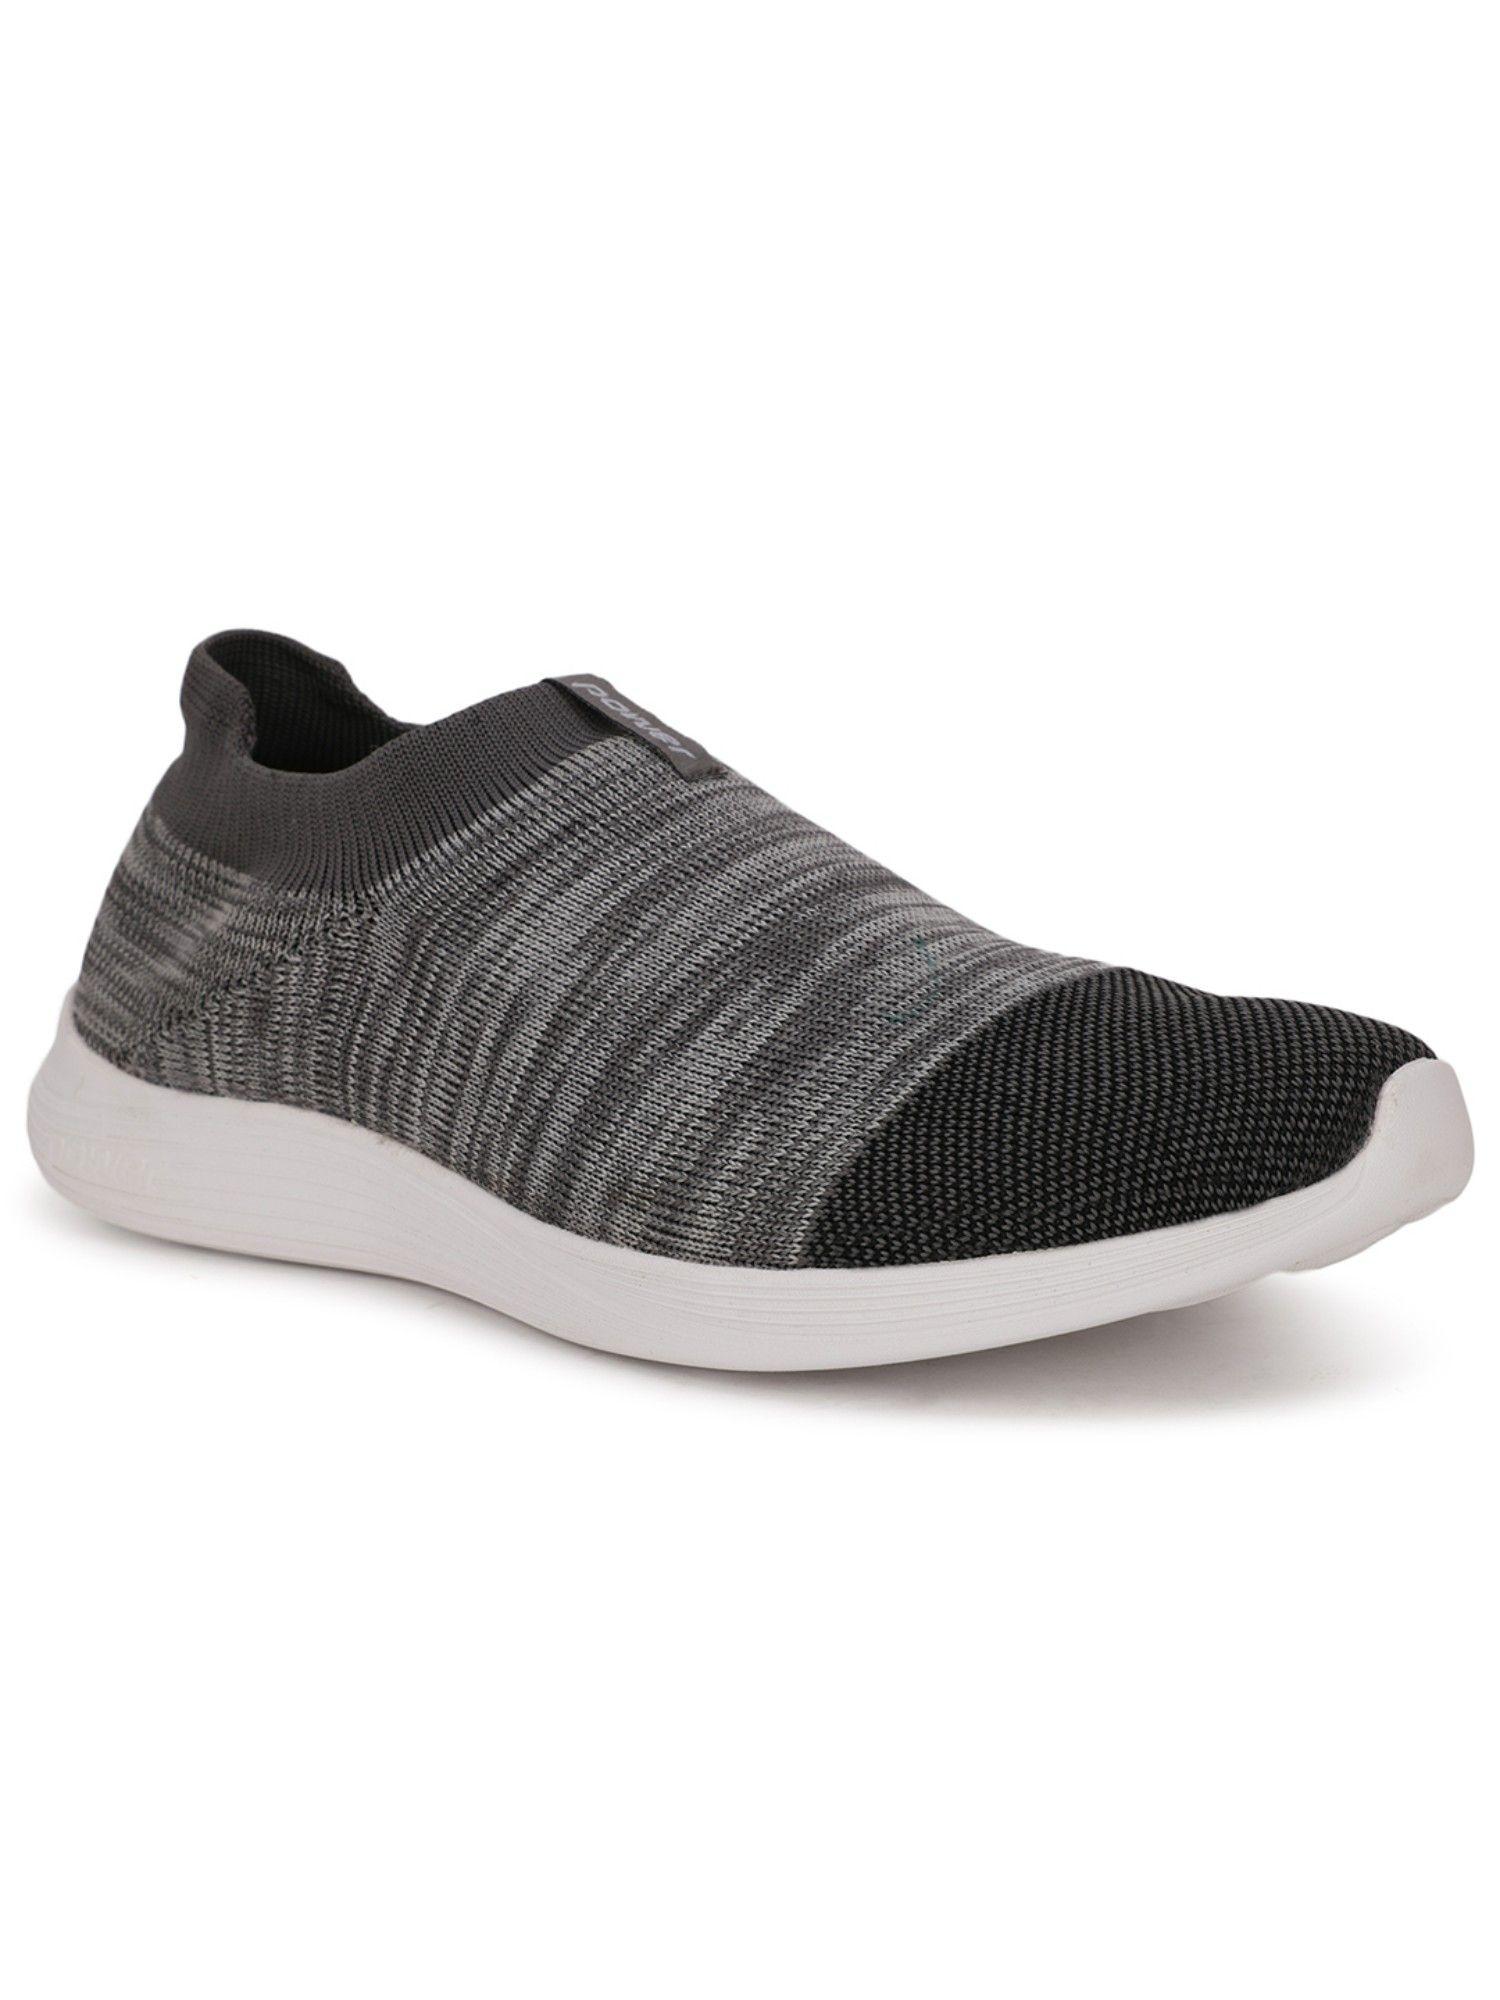 sneakers-for-men-(grey)